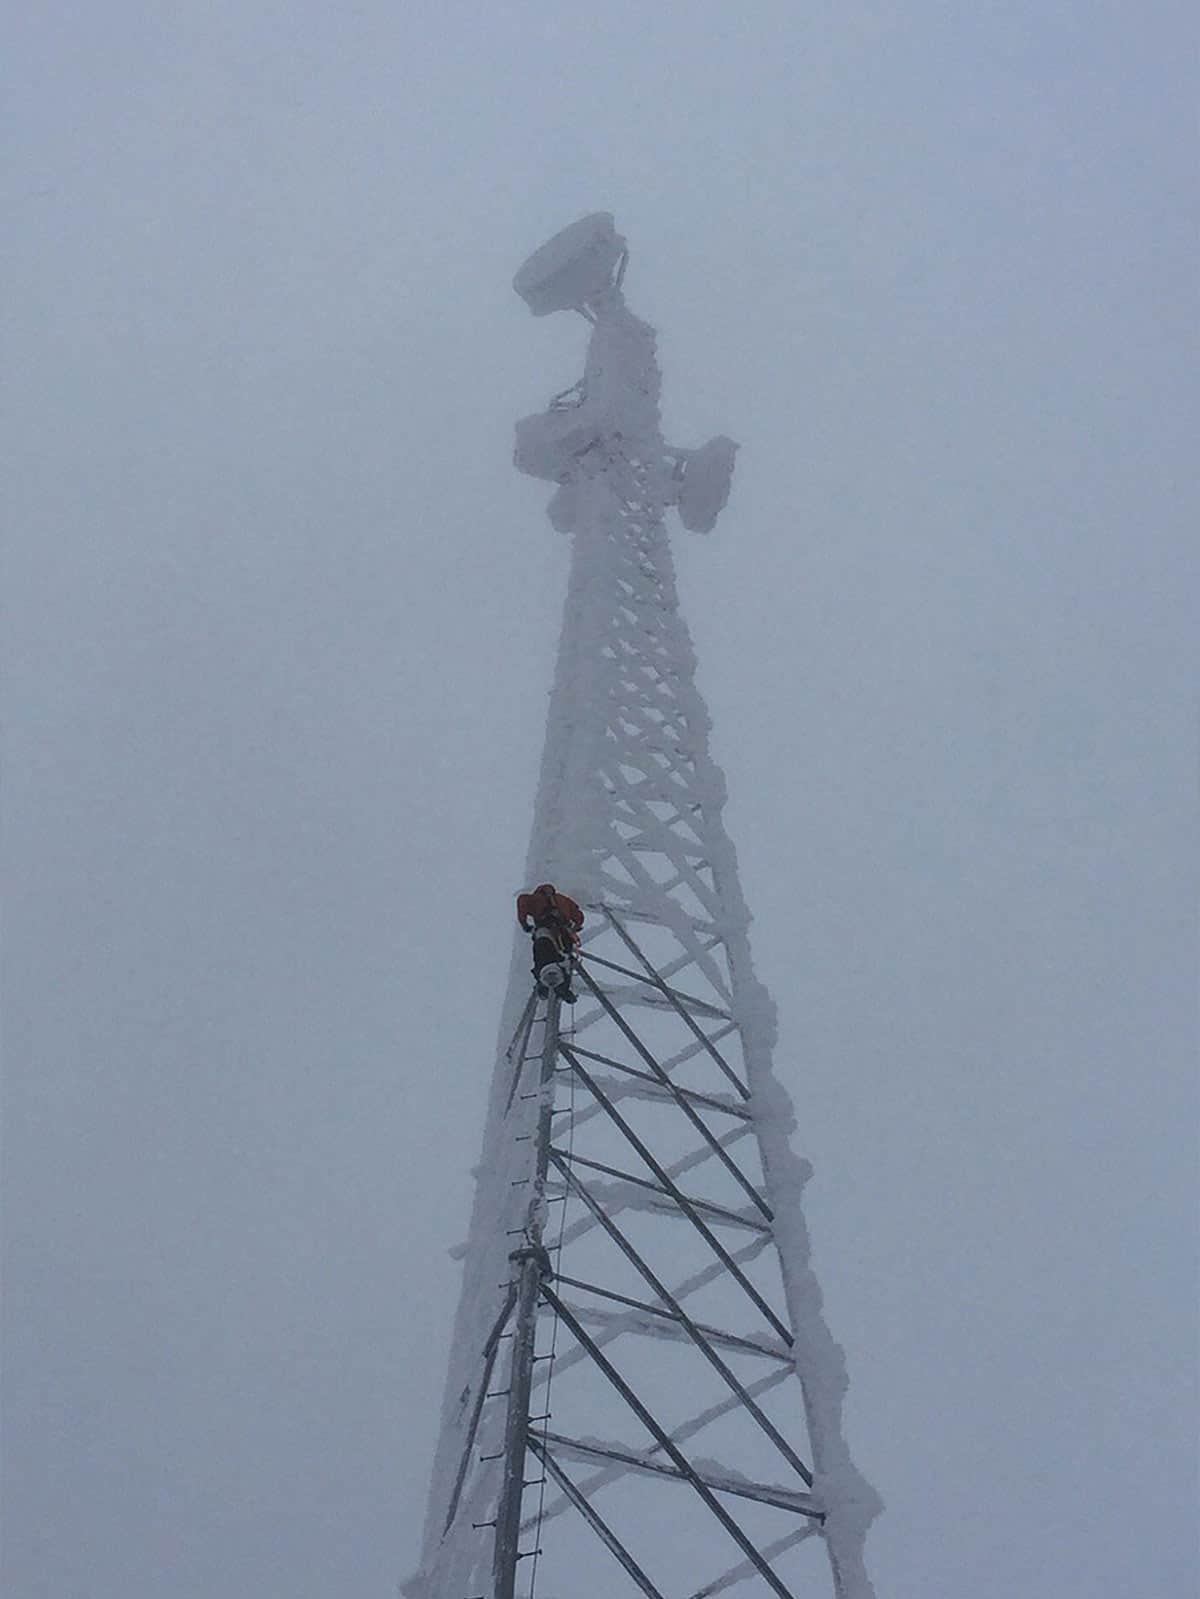 Leonardo DRS employee climbing an electrical tower during winter in Alaska